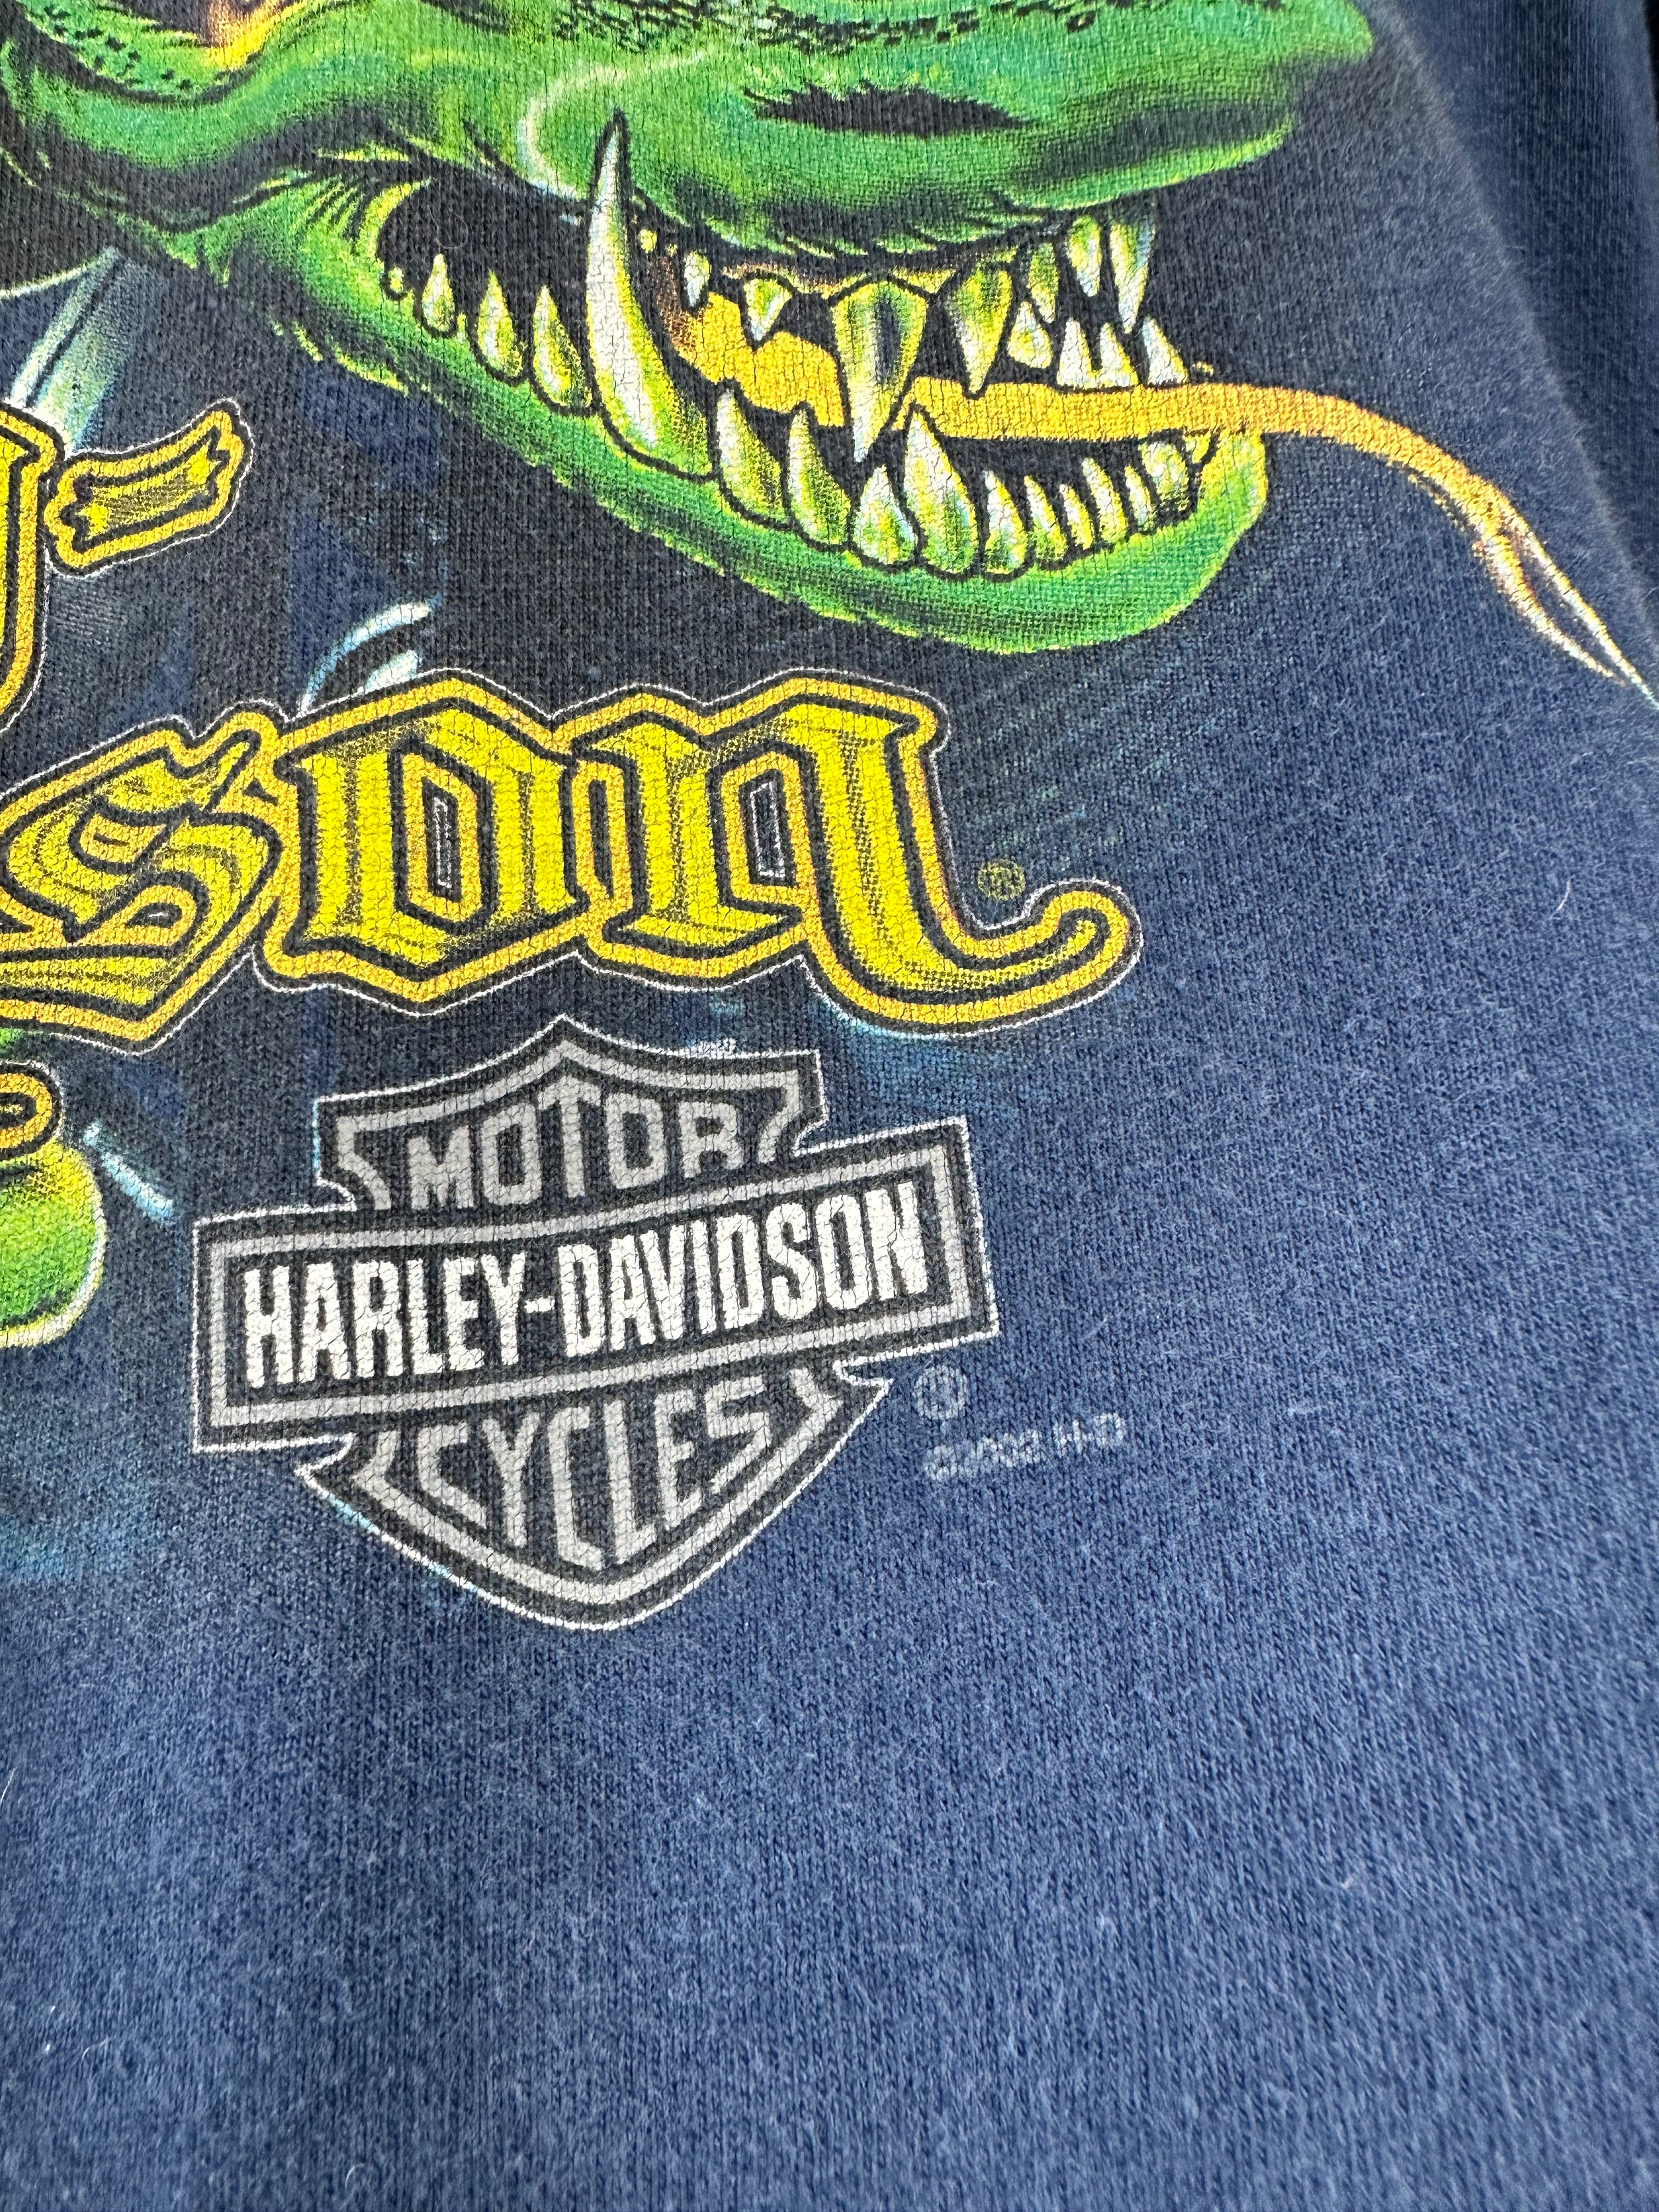 Vintage Harley Davidson Dragon 2002 T-shirt - size L